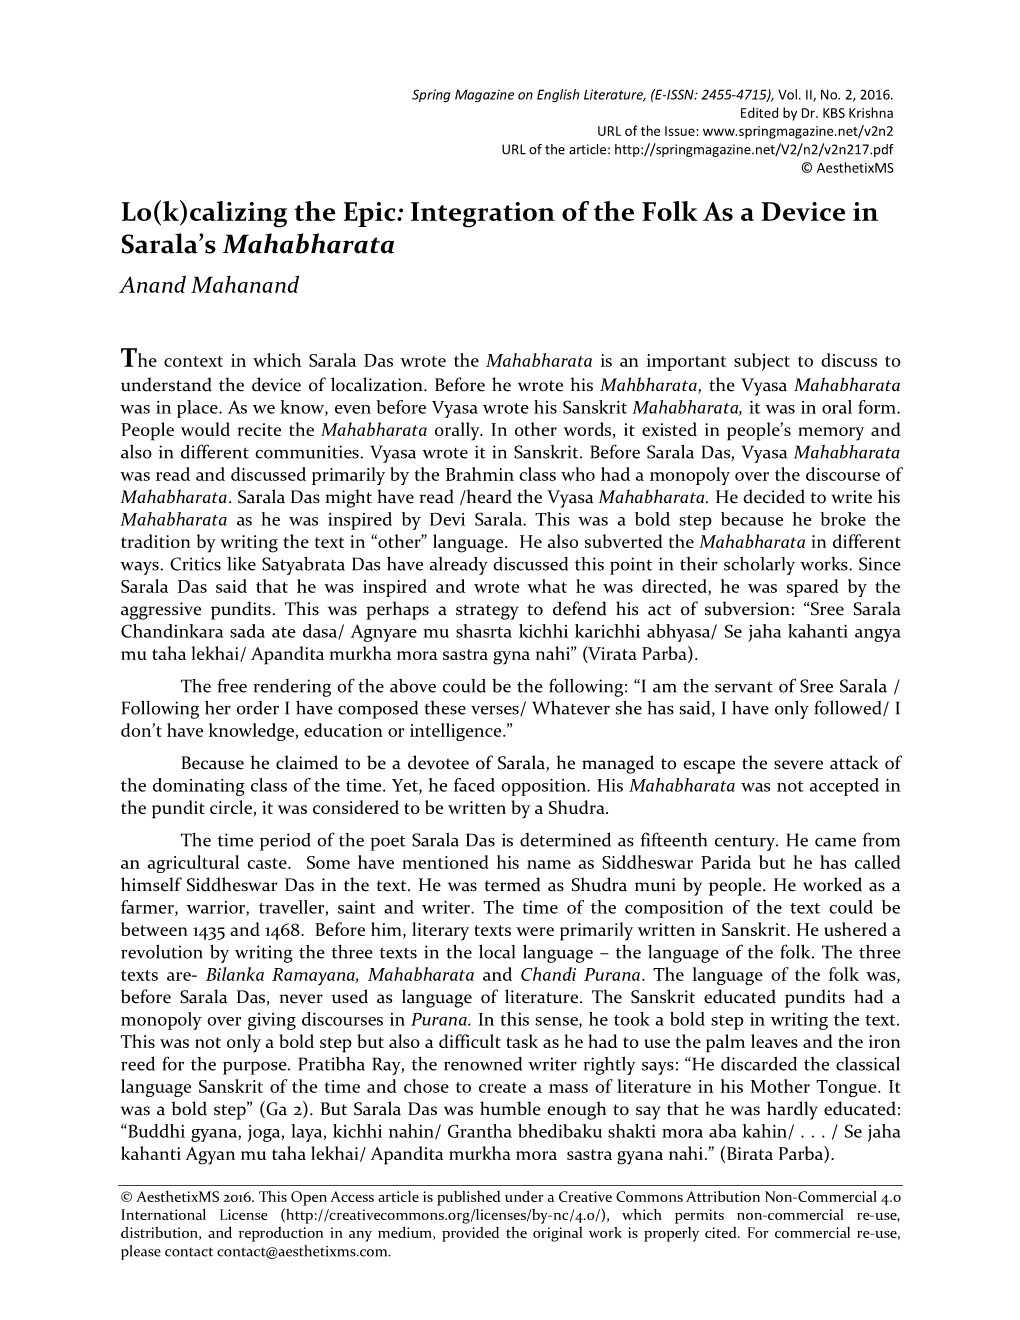 Integration of the Folk As a Device in Sarala's Mahabharata